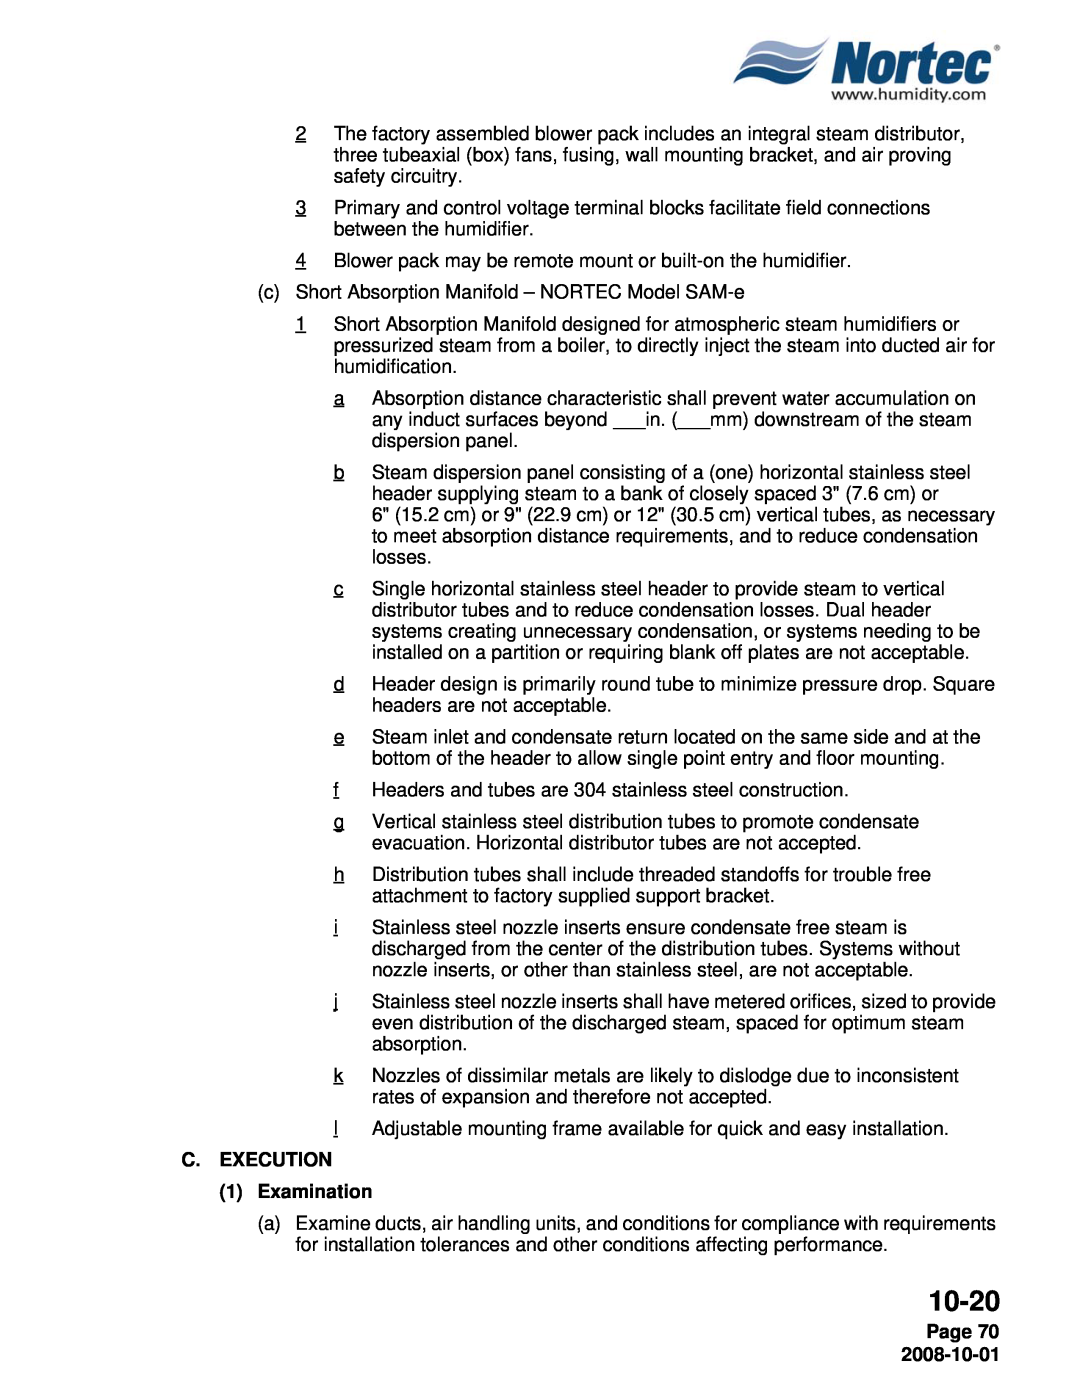 Nortec NHPC, NHTC manual 10-20, C. EXECUTION 1Examination, Page 70 